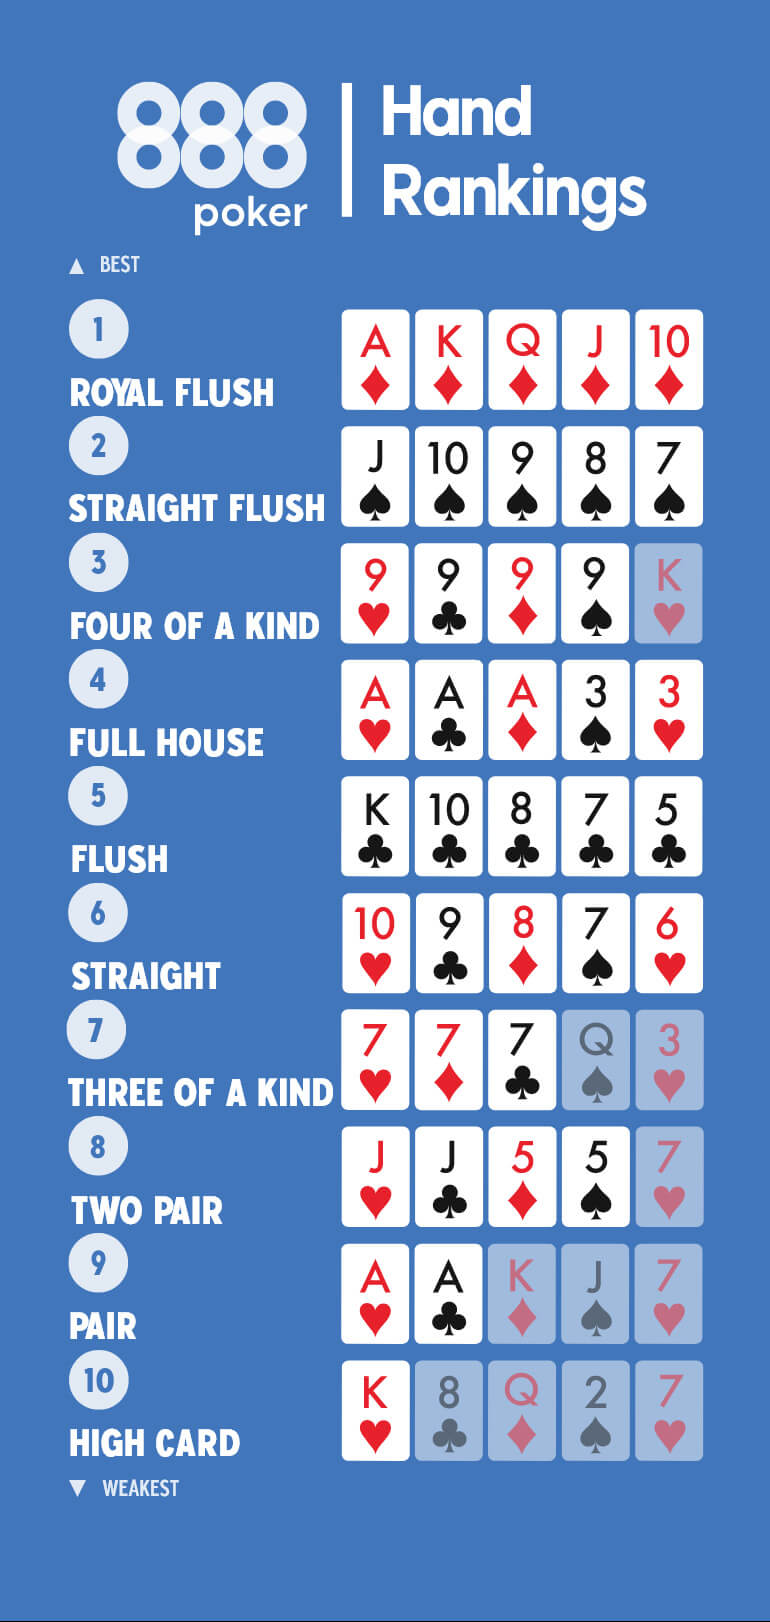 Liar's Poker Card Game Rules - Game Rules සමඟ සෙල්ලම් කිරීමට ඉගෙන ගන්න